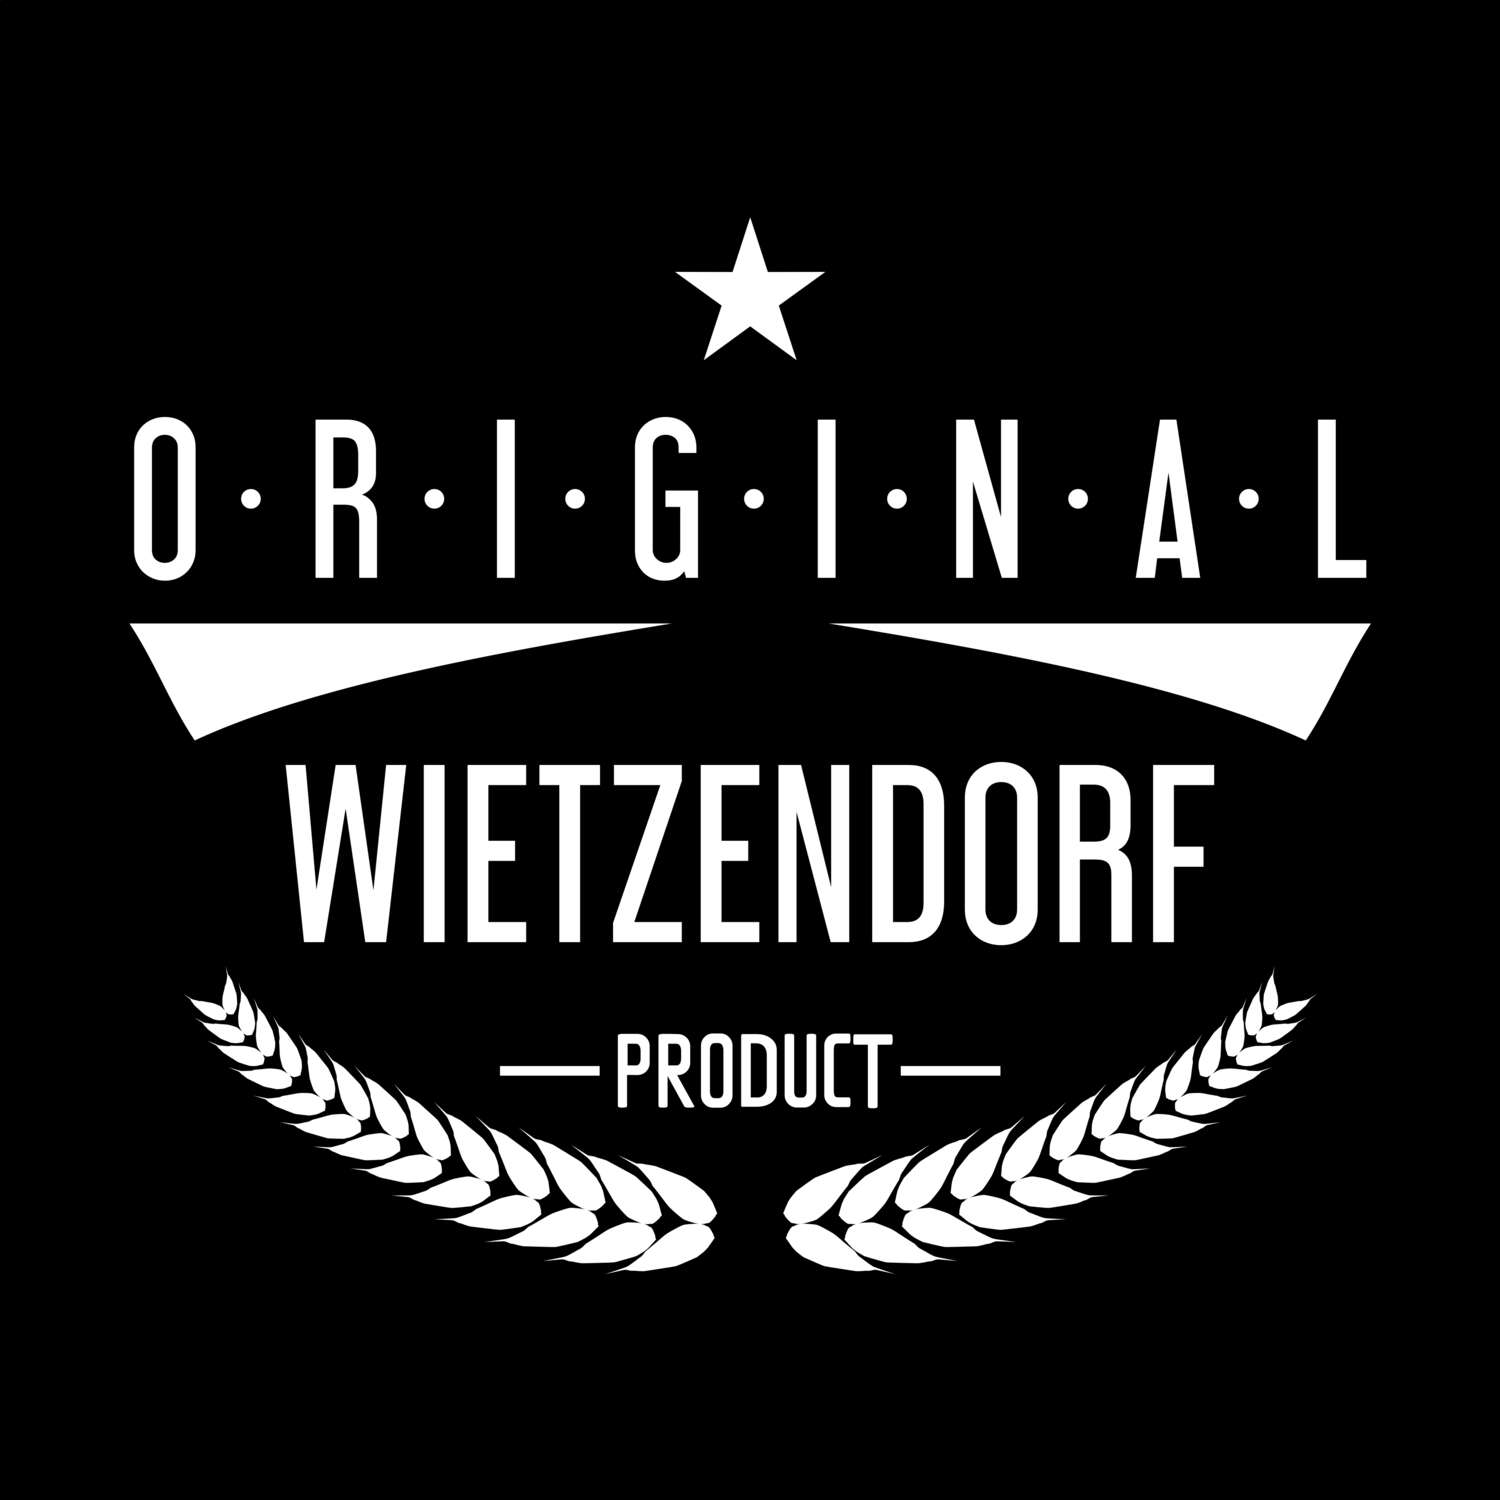 Wietzendorf T-Shirt »Original Product«